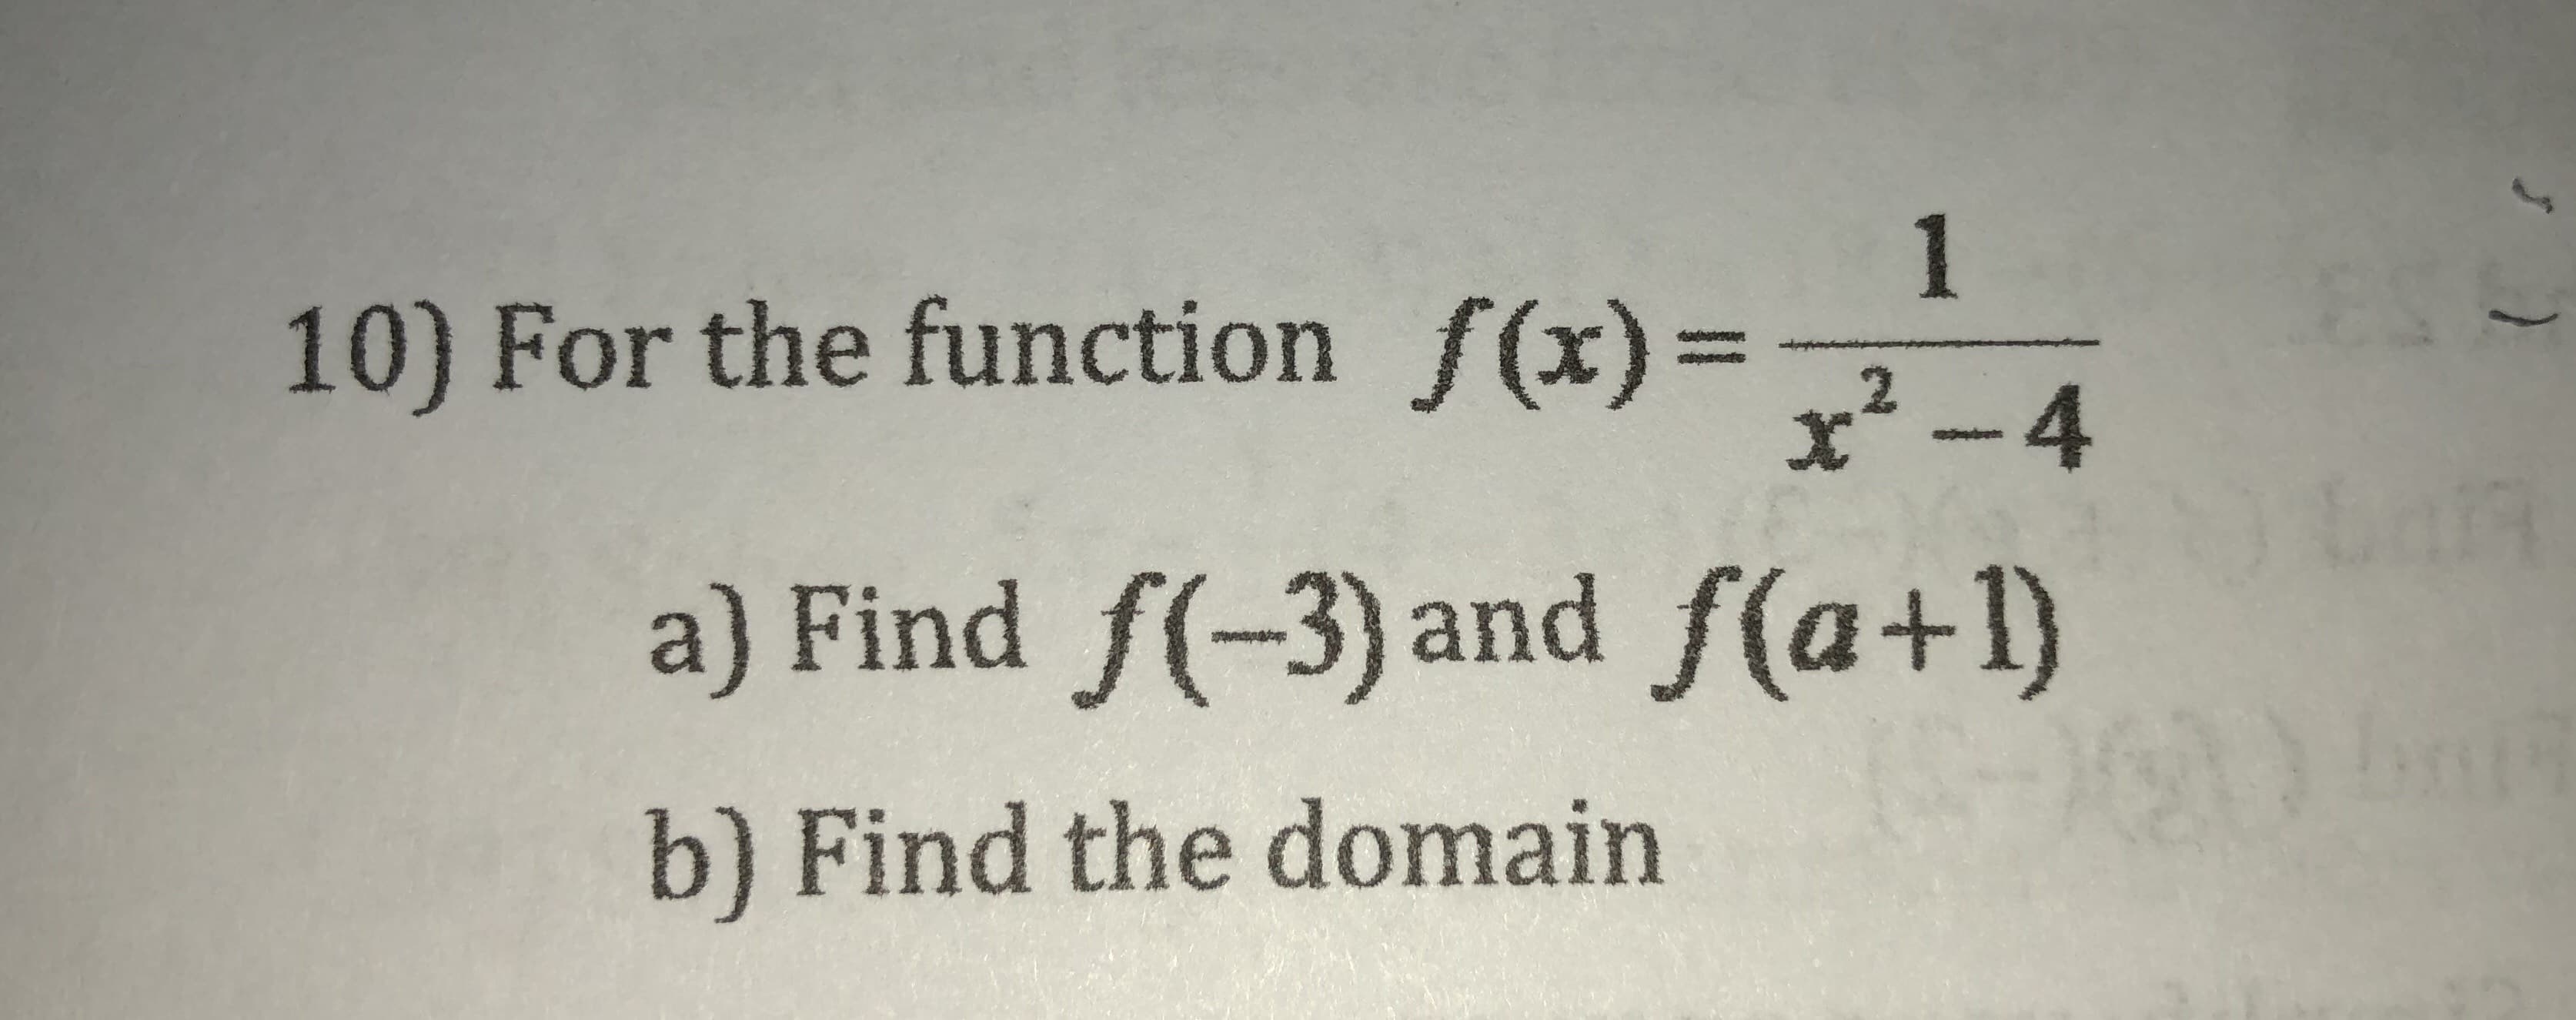 10) For the function f(x)-
x-4
a) Find f(-3) and f(a+1)
b) Find the domain
